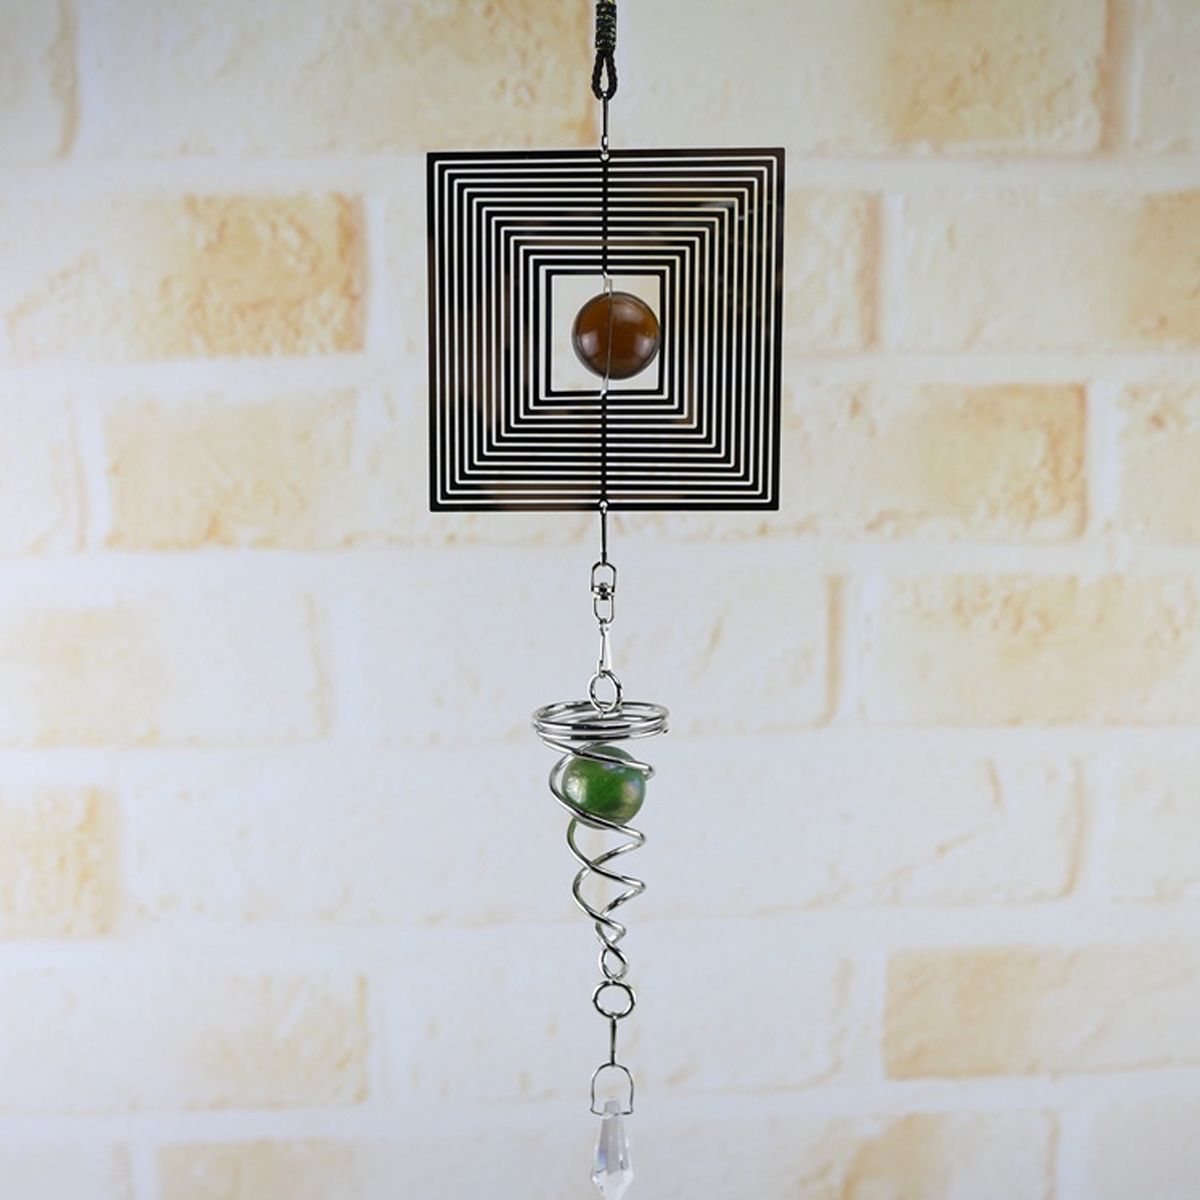 Metal-Hanging-Garden-Wind-Spinner-Round-Crystal-Ball-Bell-Garden-Home-Ornament-1682662